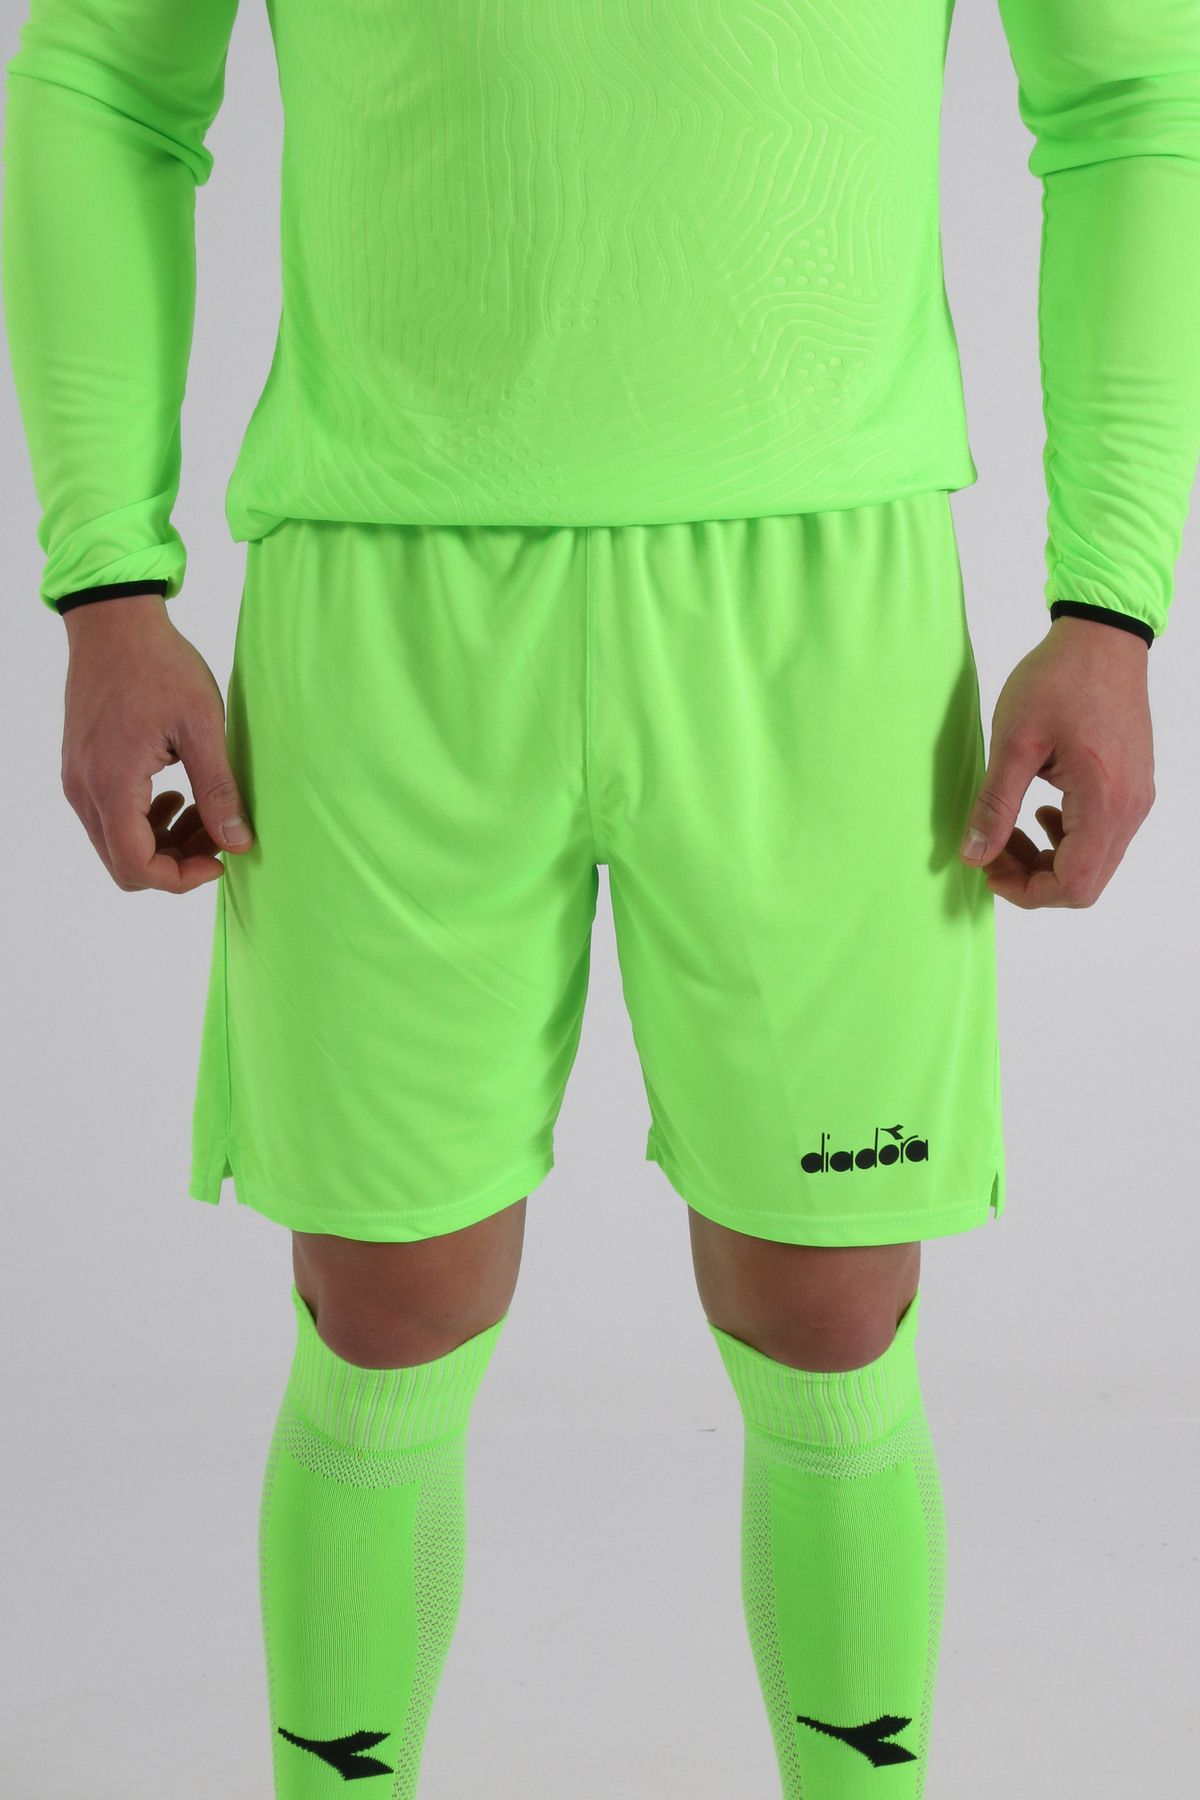 Diadora Elite Futbol Kaleci Şortu Neon Yeşil